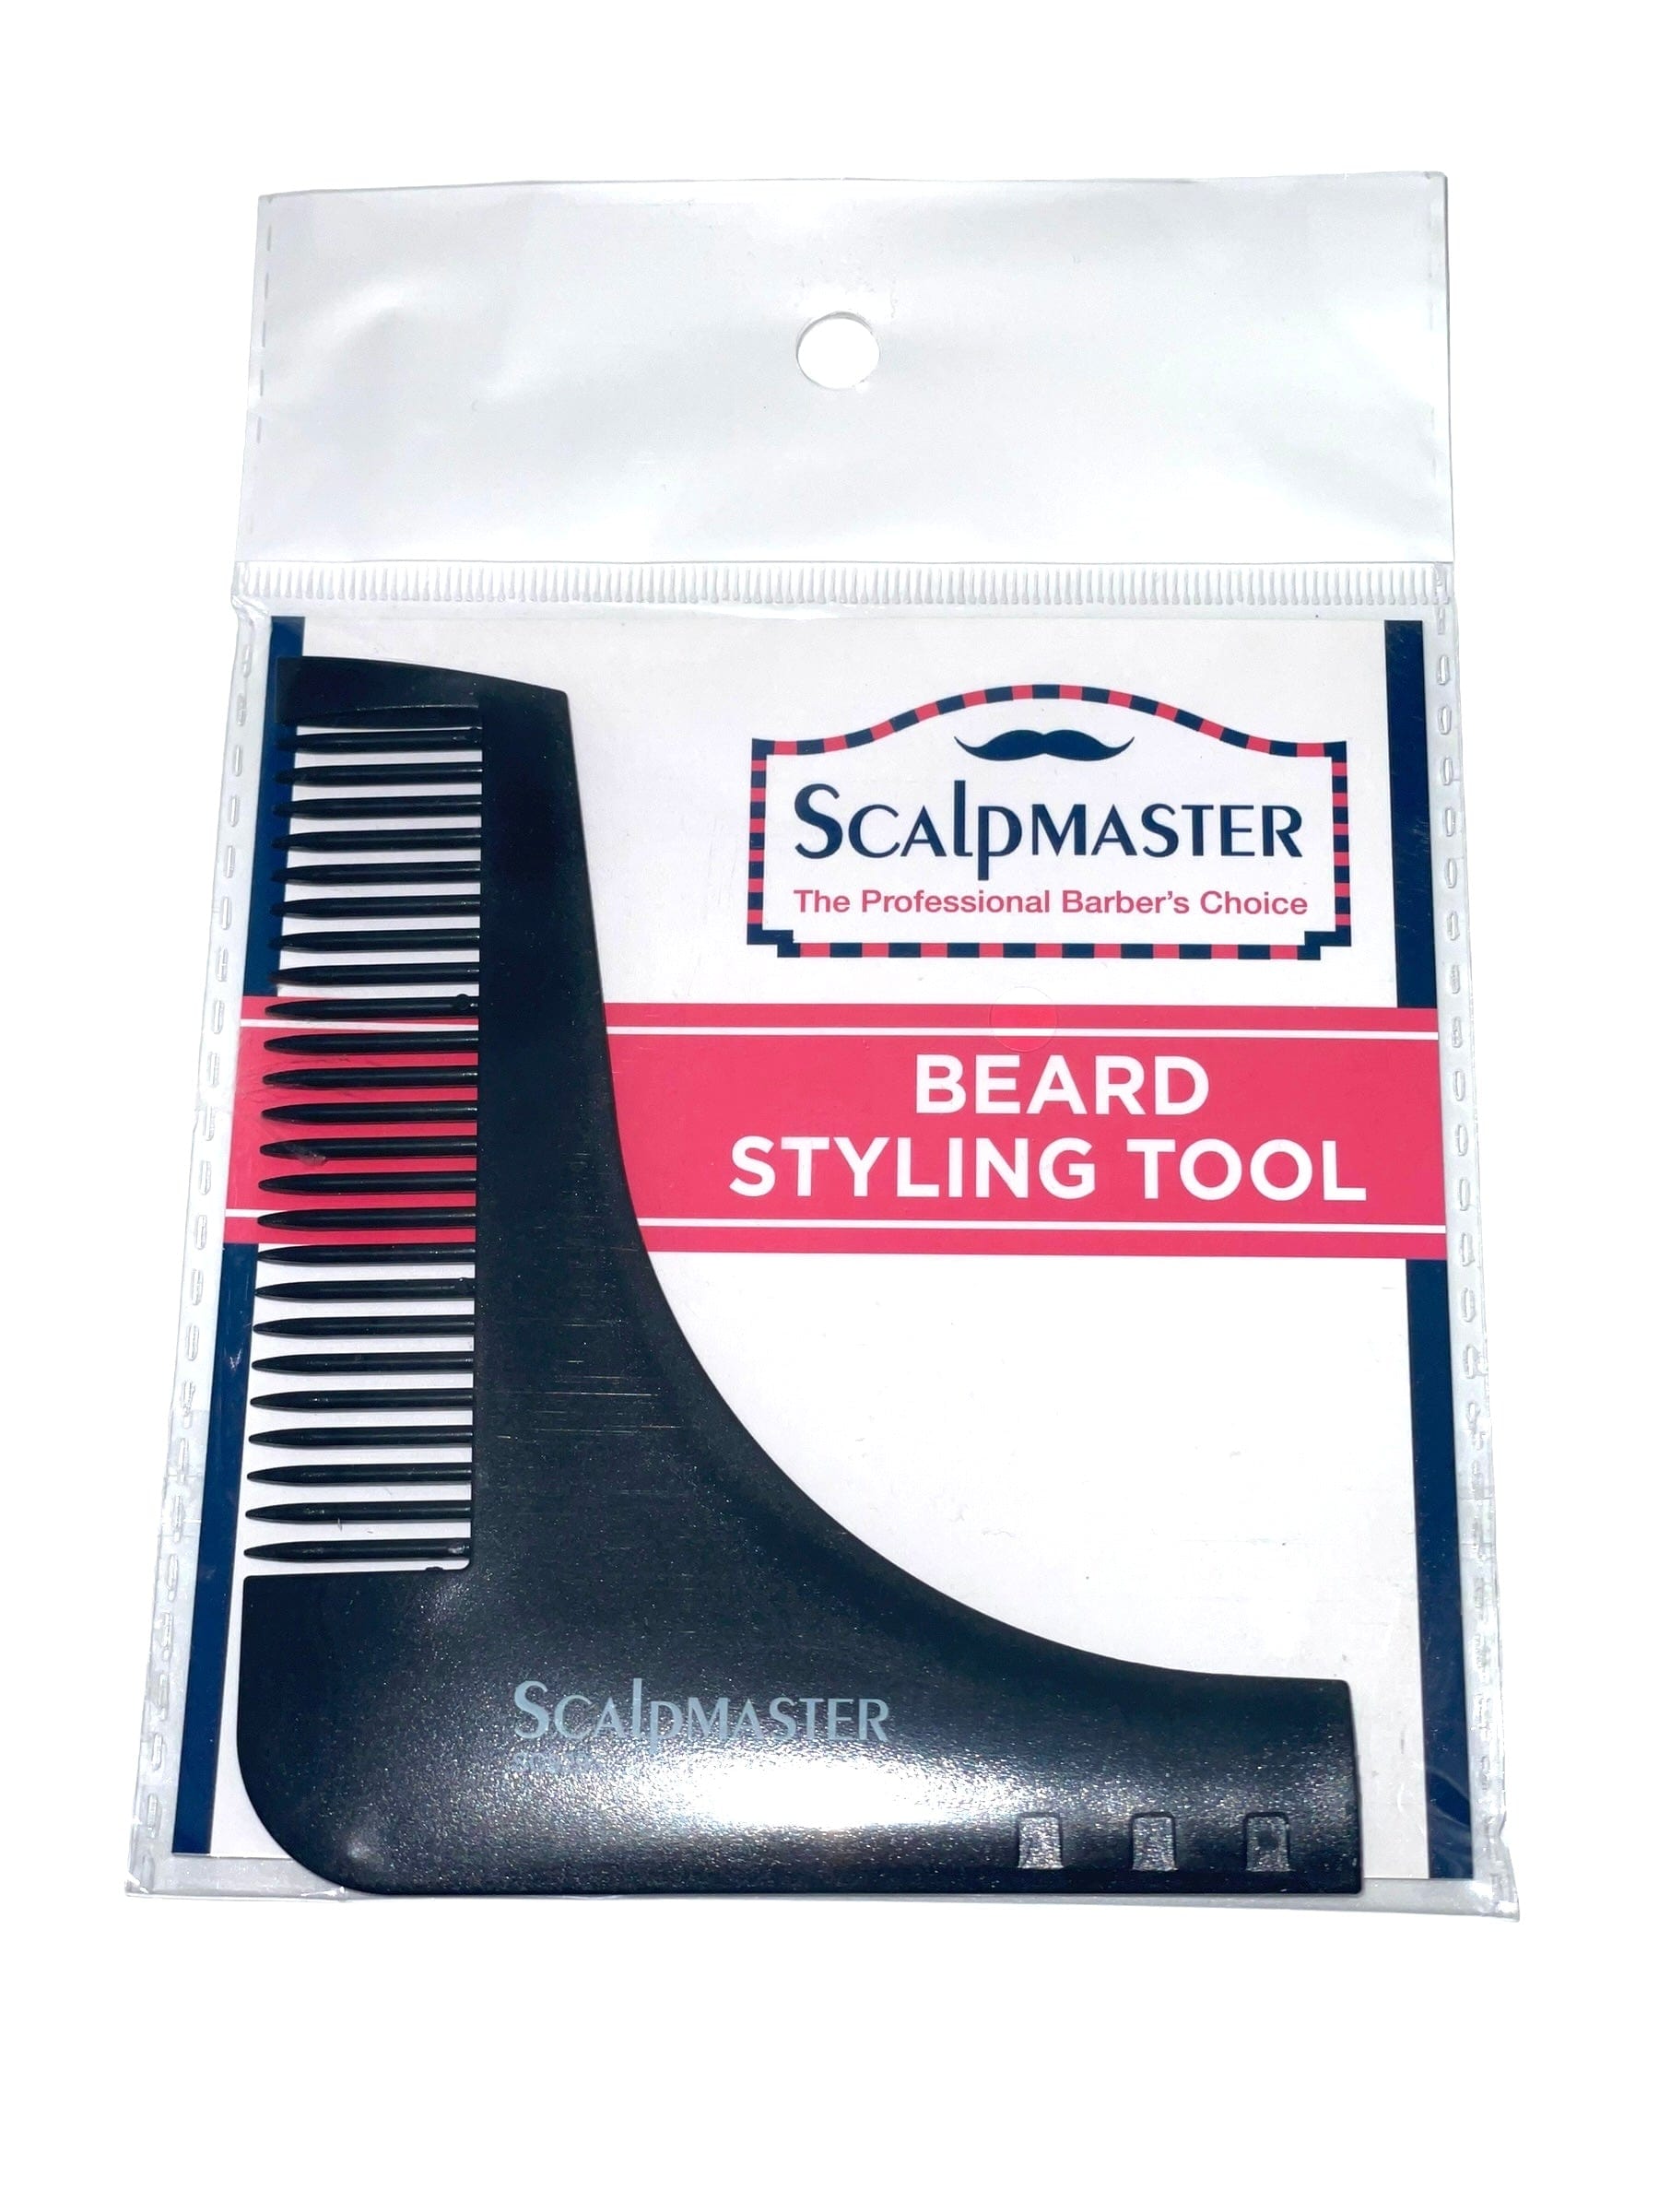 Beard Styling Tool Scalp Master Barber Choice